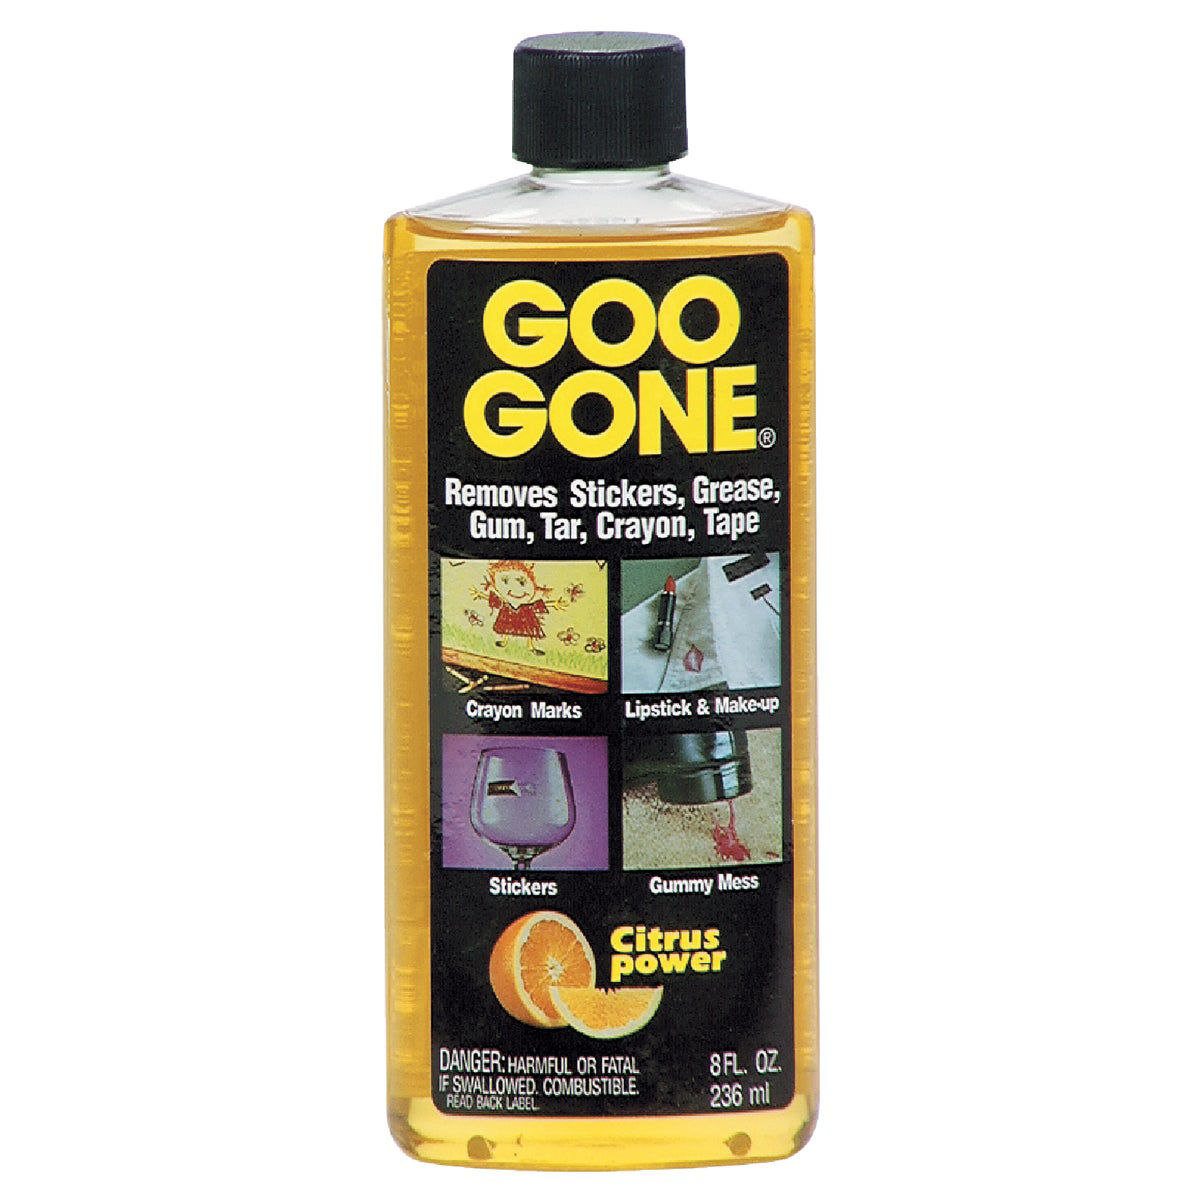 Goo Gone Automotive - Cleans Auto Interiors/ Bodies and Rims, Removes Bugs  & Stickers - 12 Fl. Oz. : Automotive 